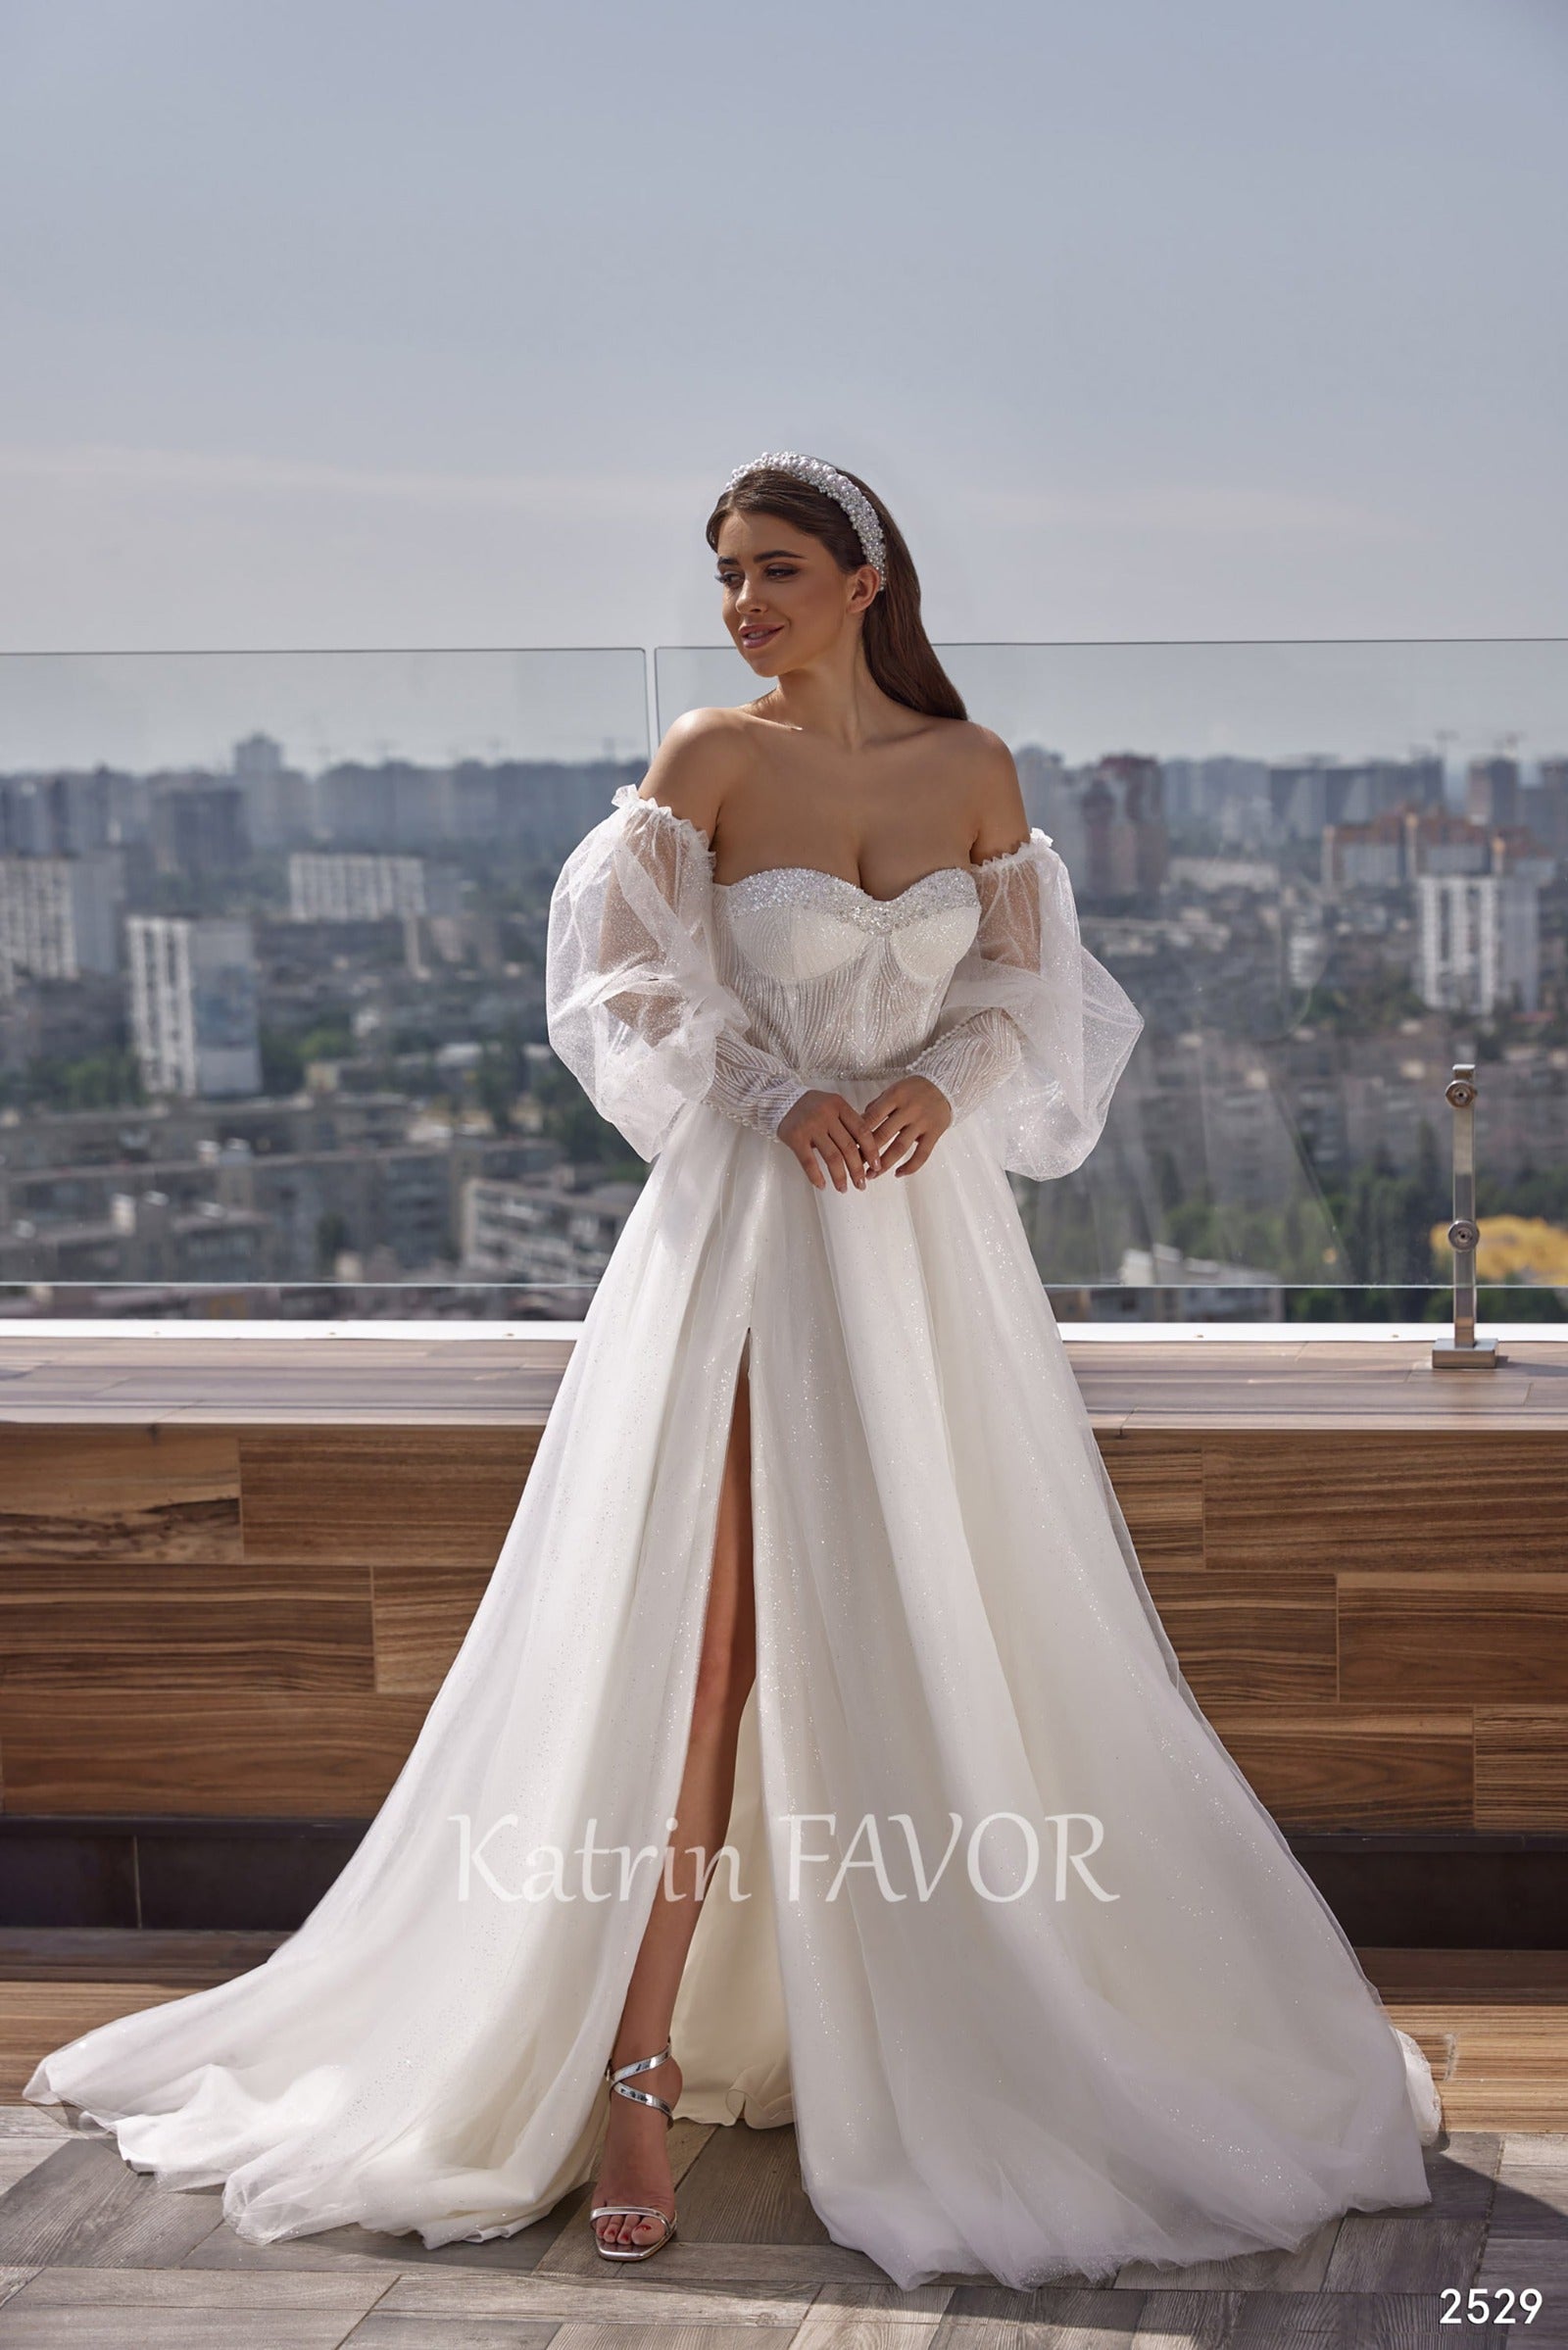 KatrinFAVORboutique-Fairytale princess puff sleeve wedding dress